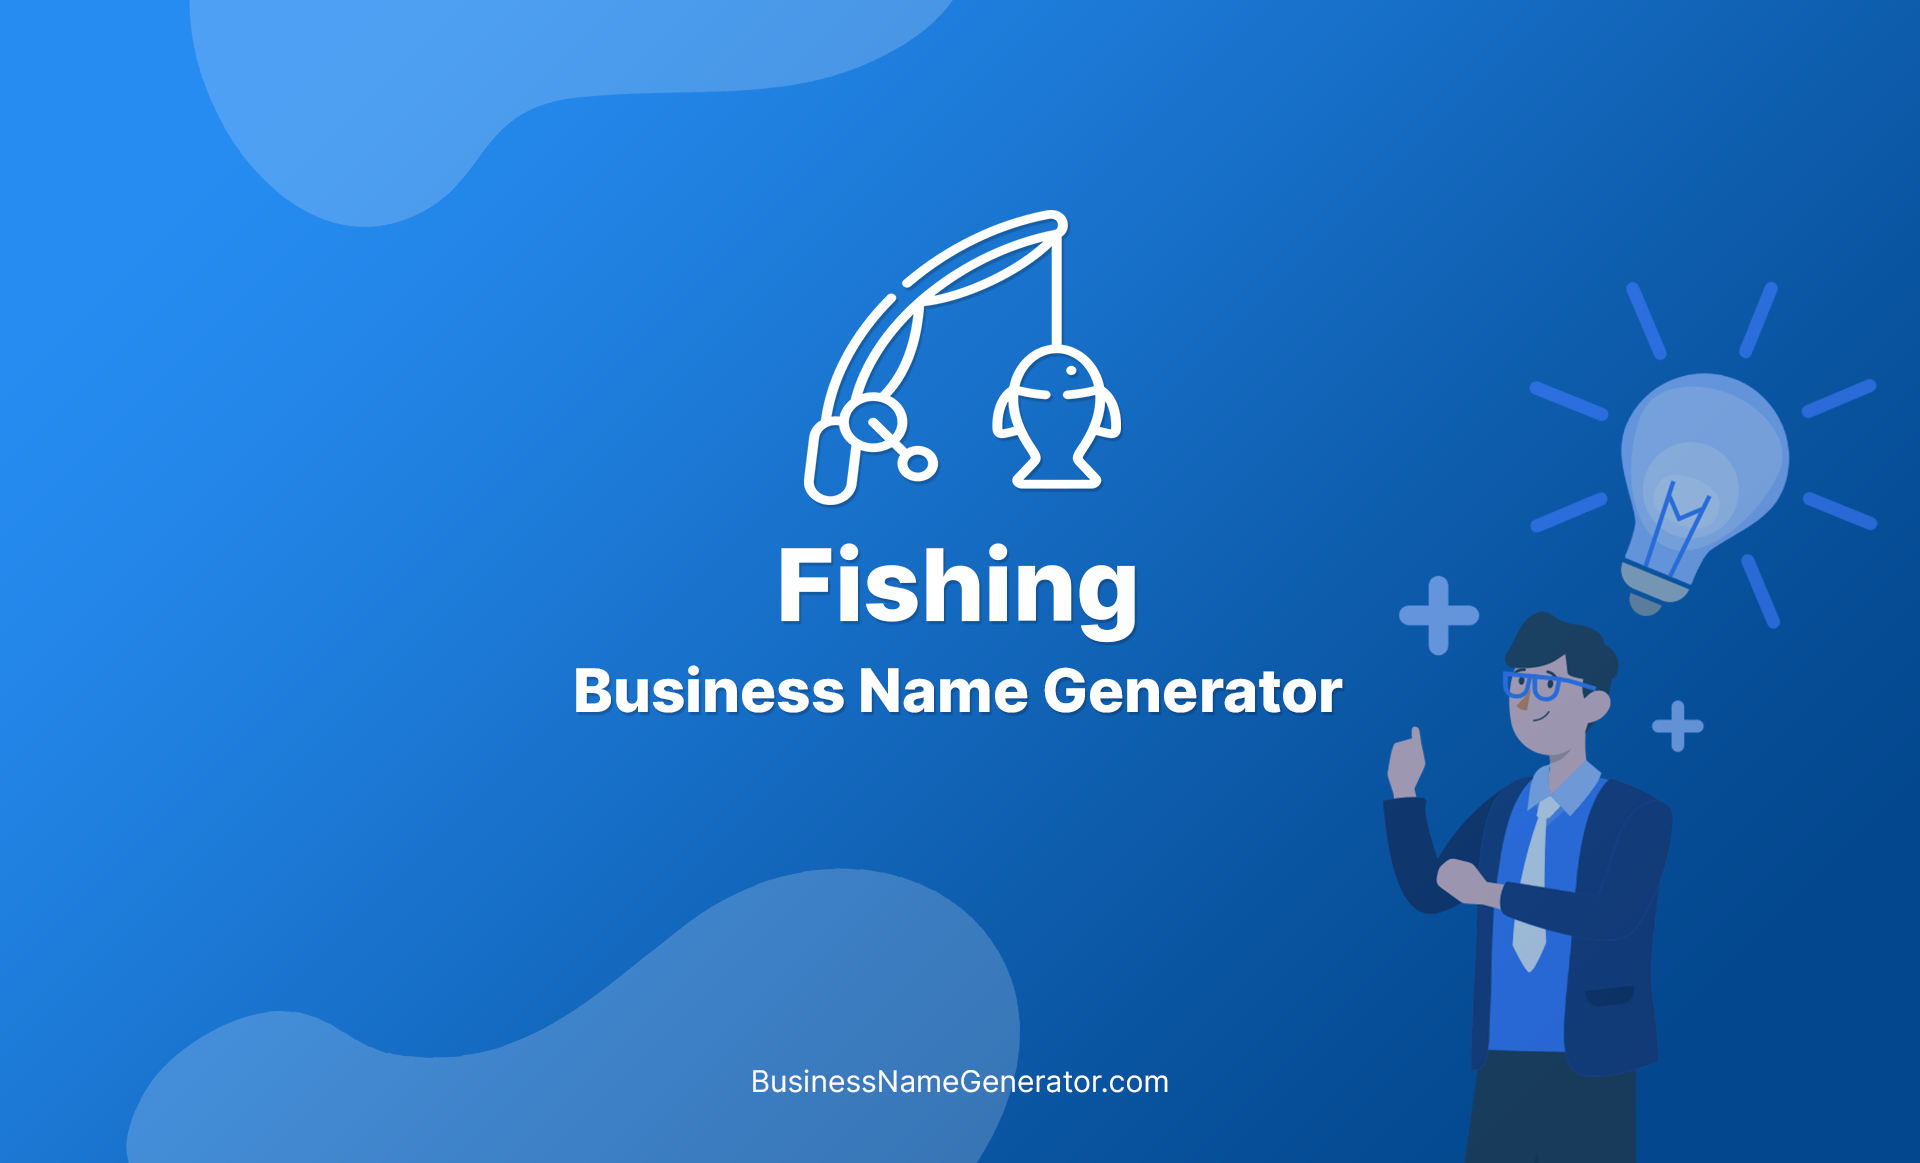 Fishing Business Name Generator